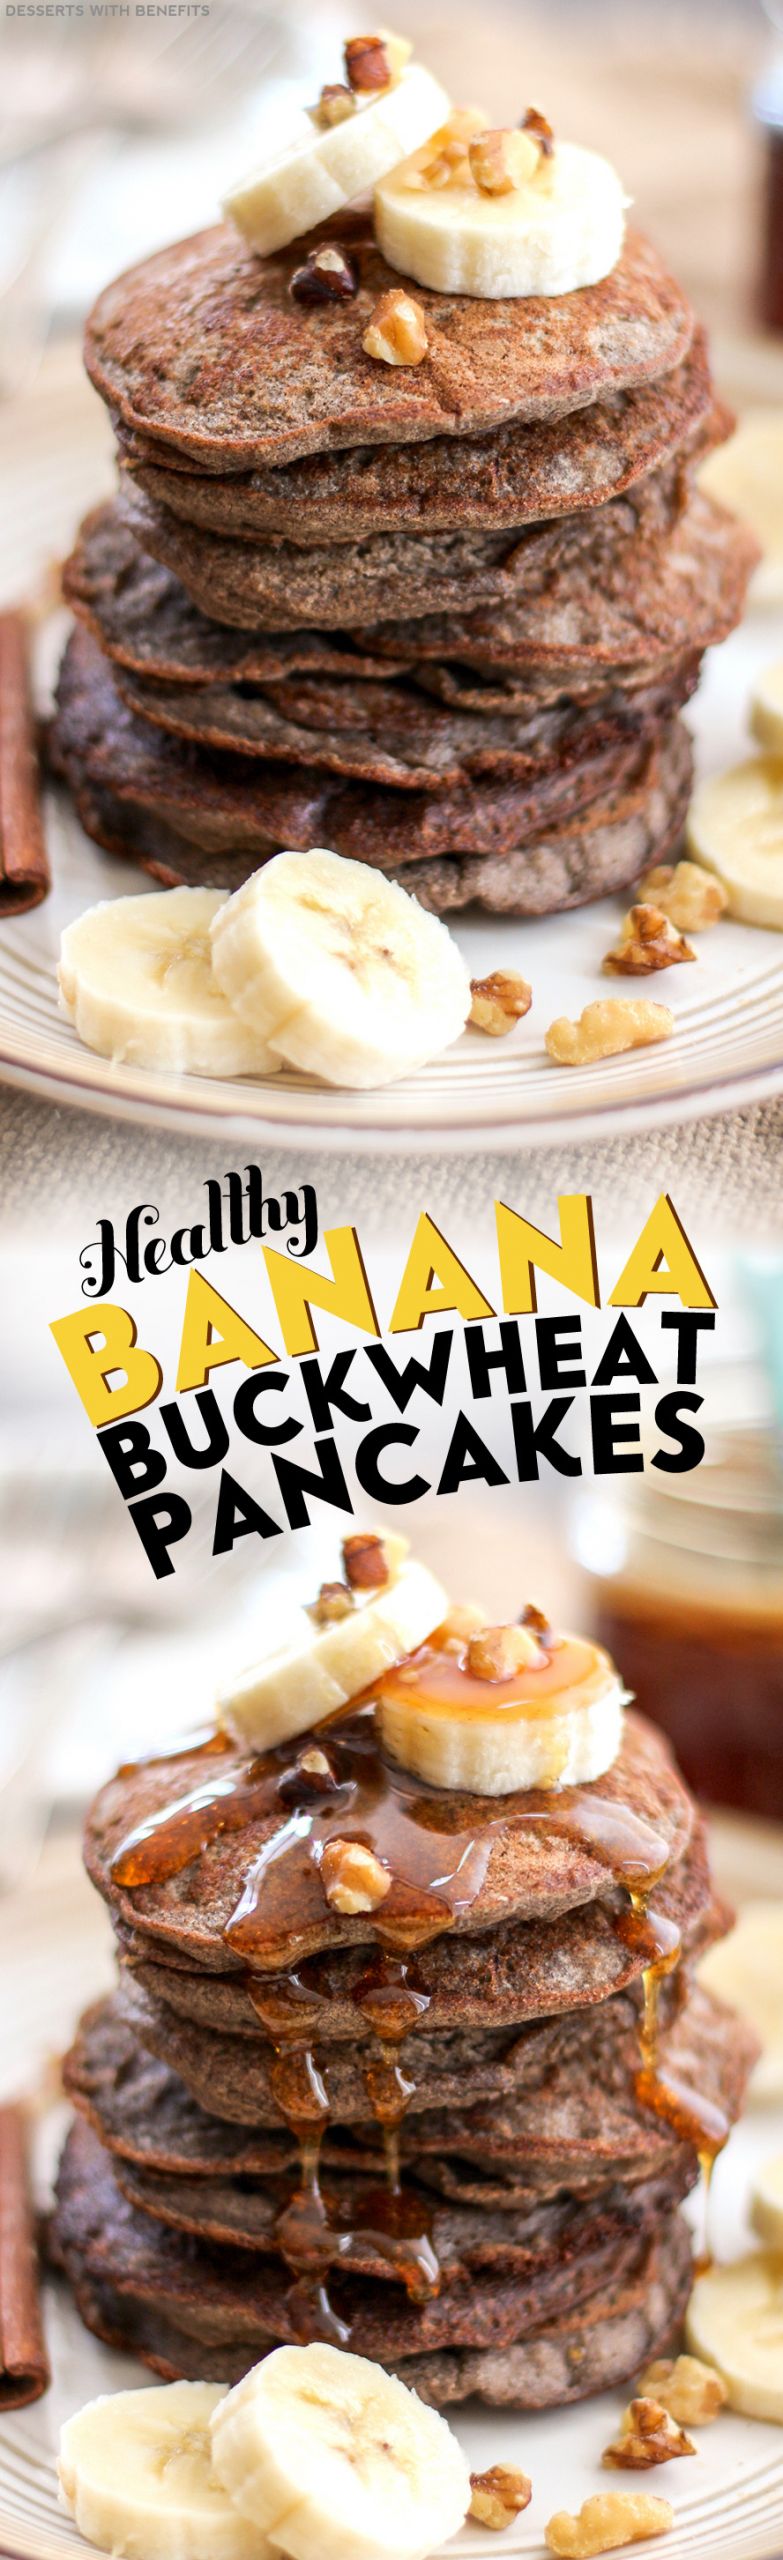 Low Fat Vegan Desserts
 Healthy Banana Buckwheat Pancakes Recipe low fat gluten